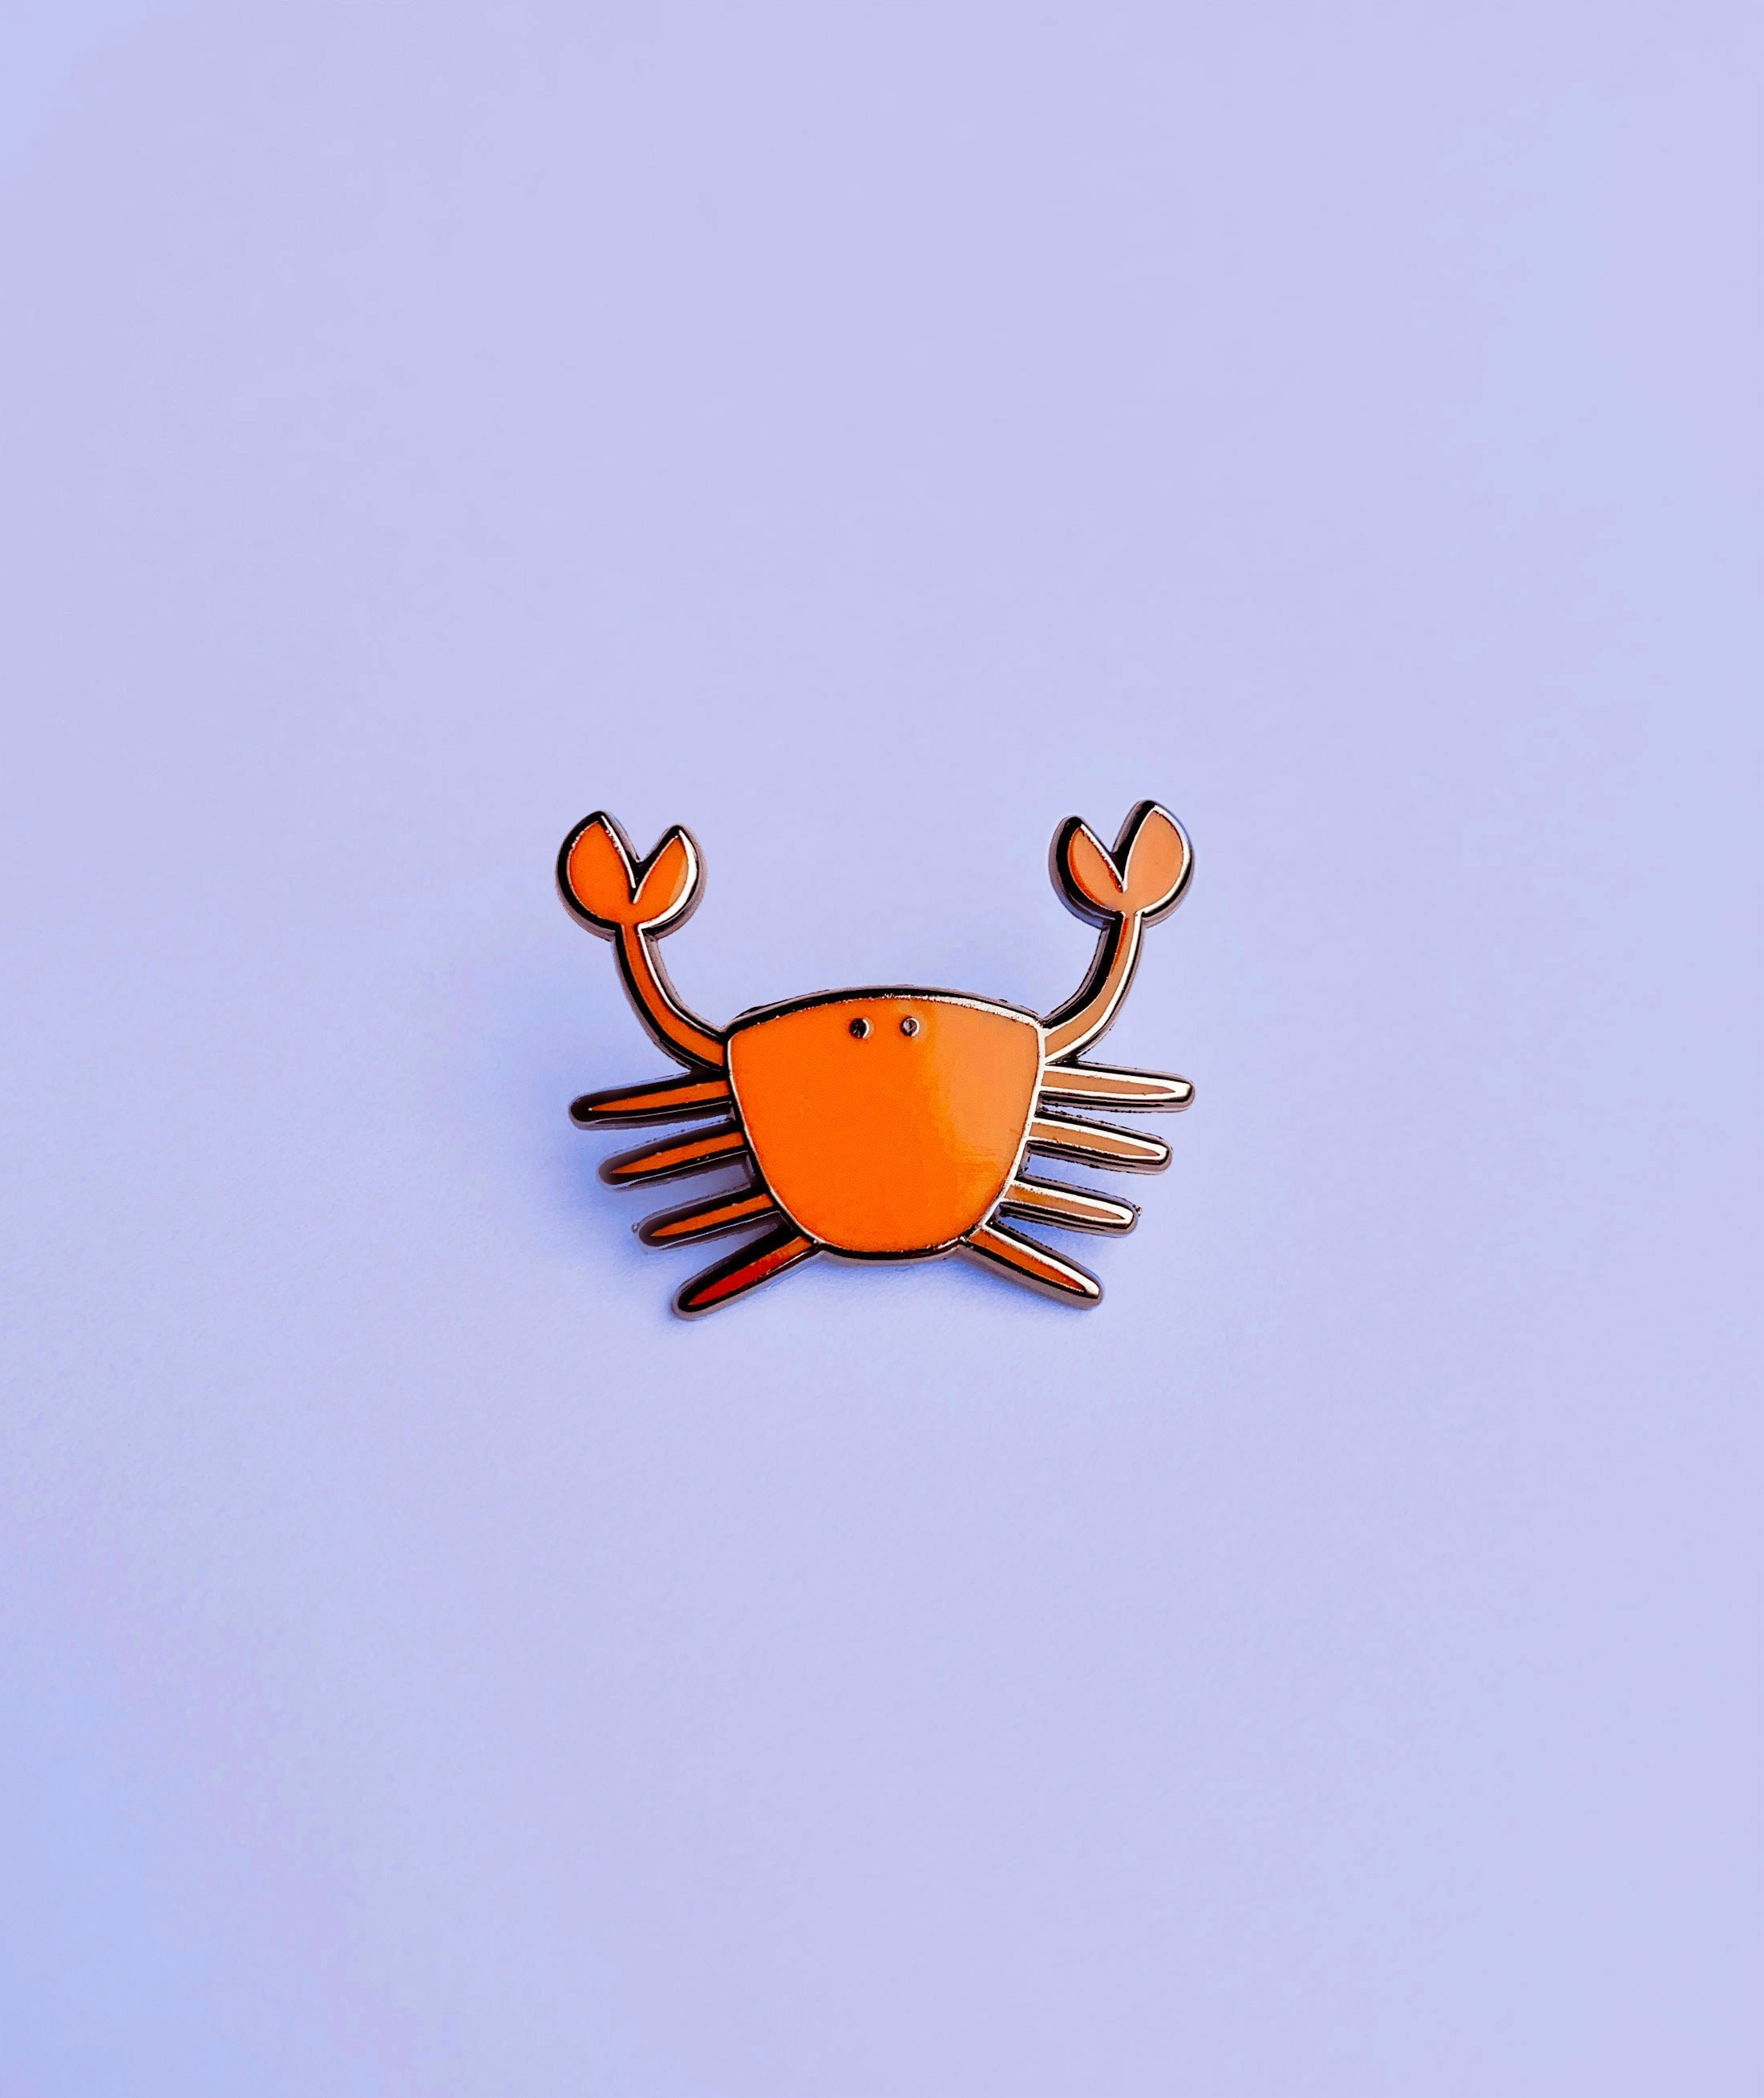 Red Crab Enamel Pin - Cute Animal Pin, Hard Ocean Animal, Lapel Badge, Cancer Sign, Crustacean